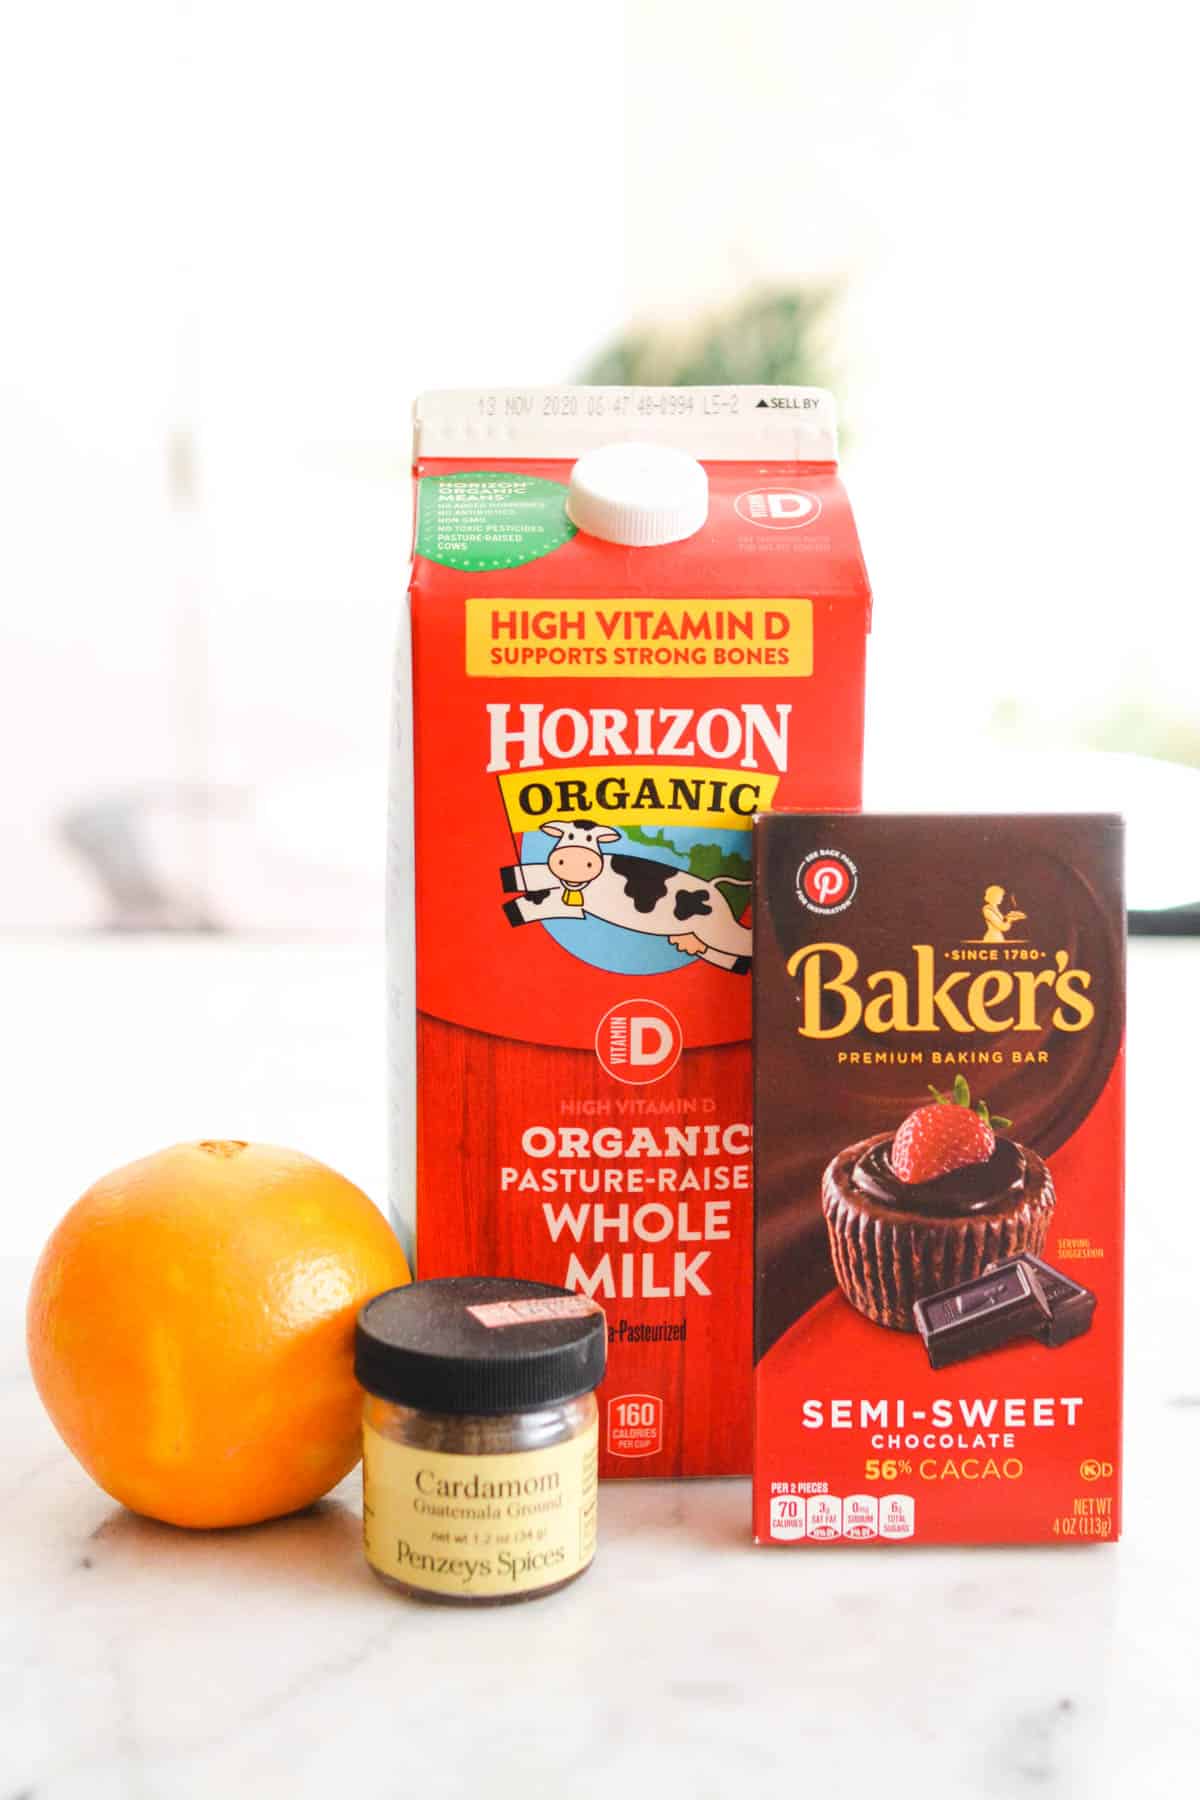 Ingredients to make orange cardamom hot chocolate